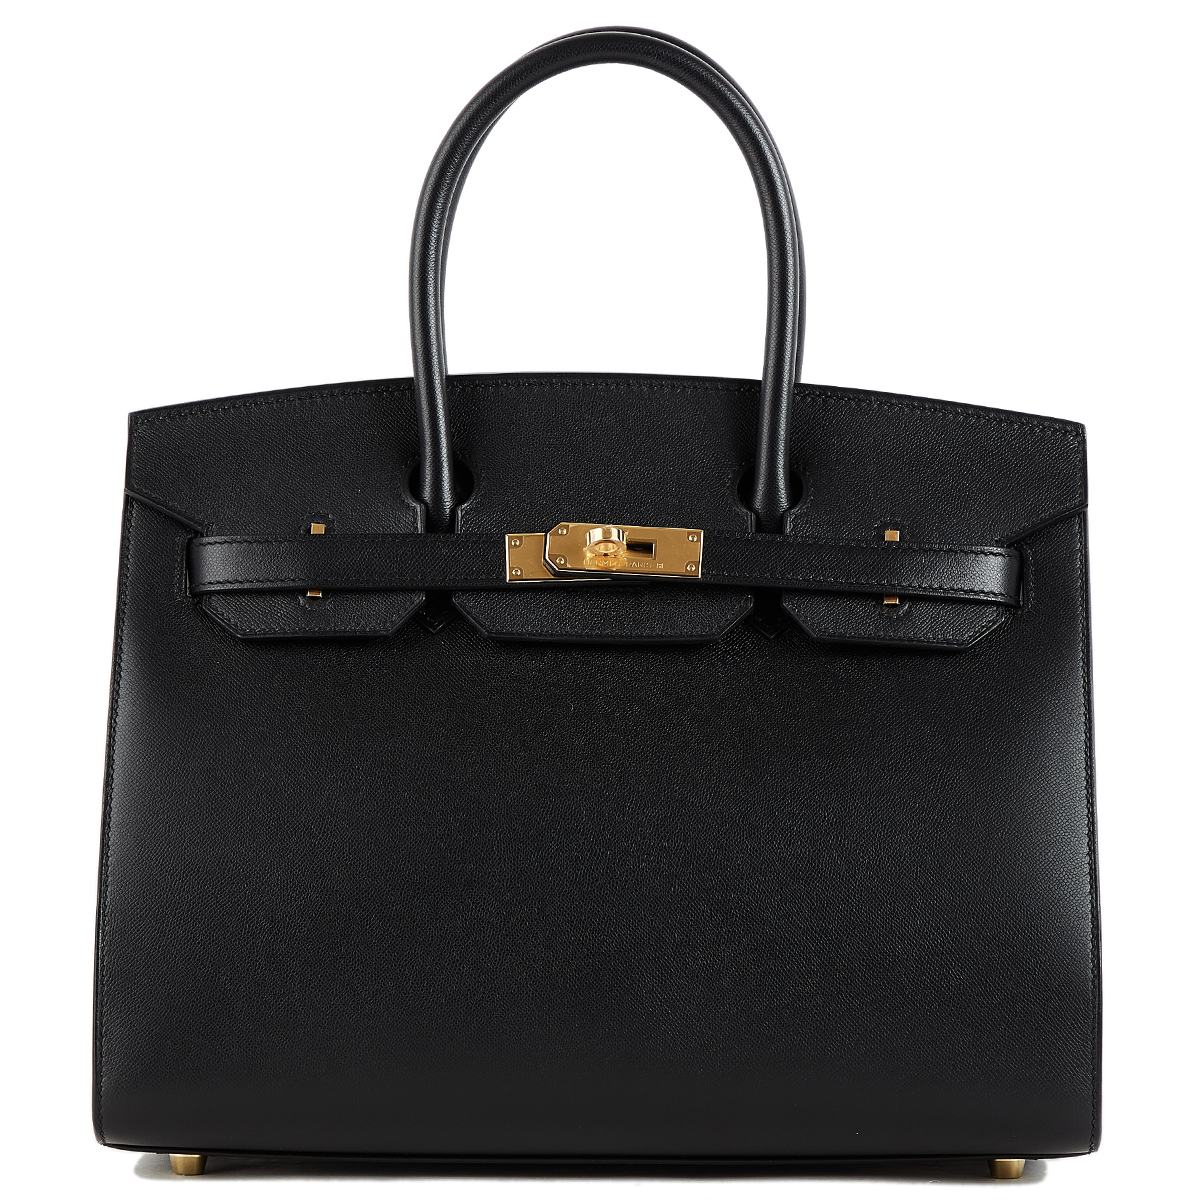 The New Hermes Birkin Sellier handbag • Petite in Paris  Hermes birkin,  Hermes bag birkin, Hermes birkin handbags